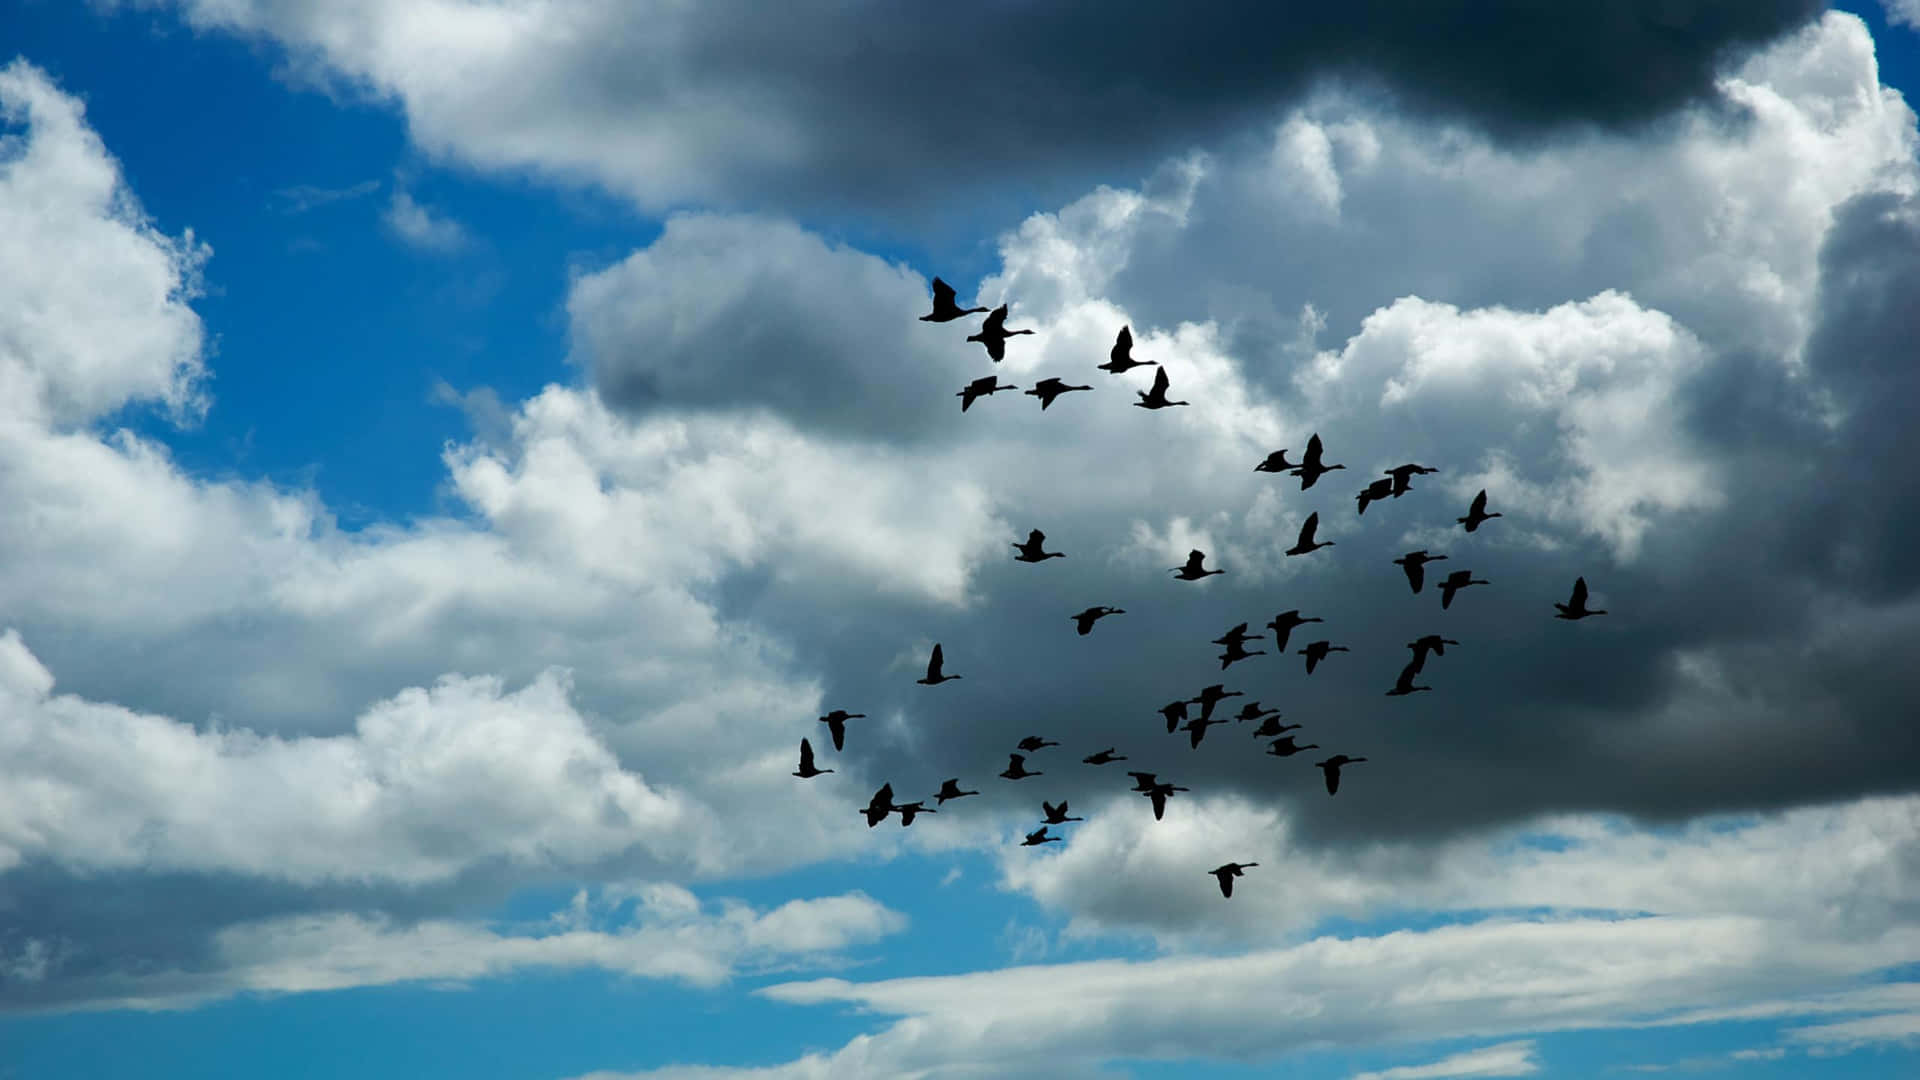 Flying Birds In Cloudy Sky Wallpaper